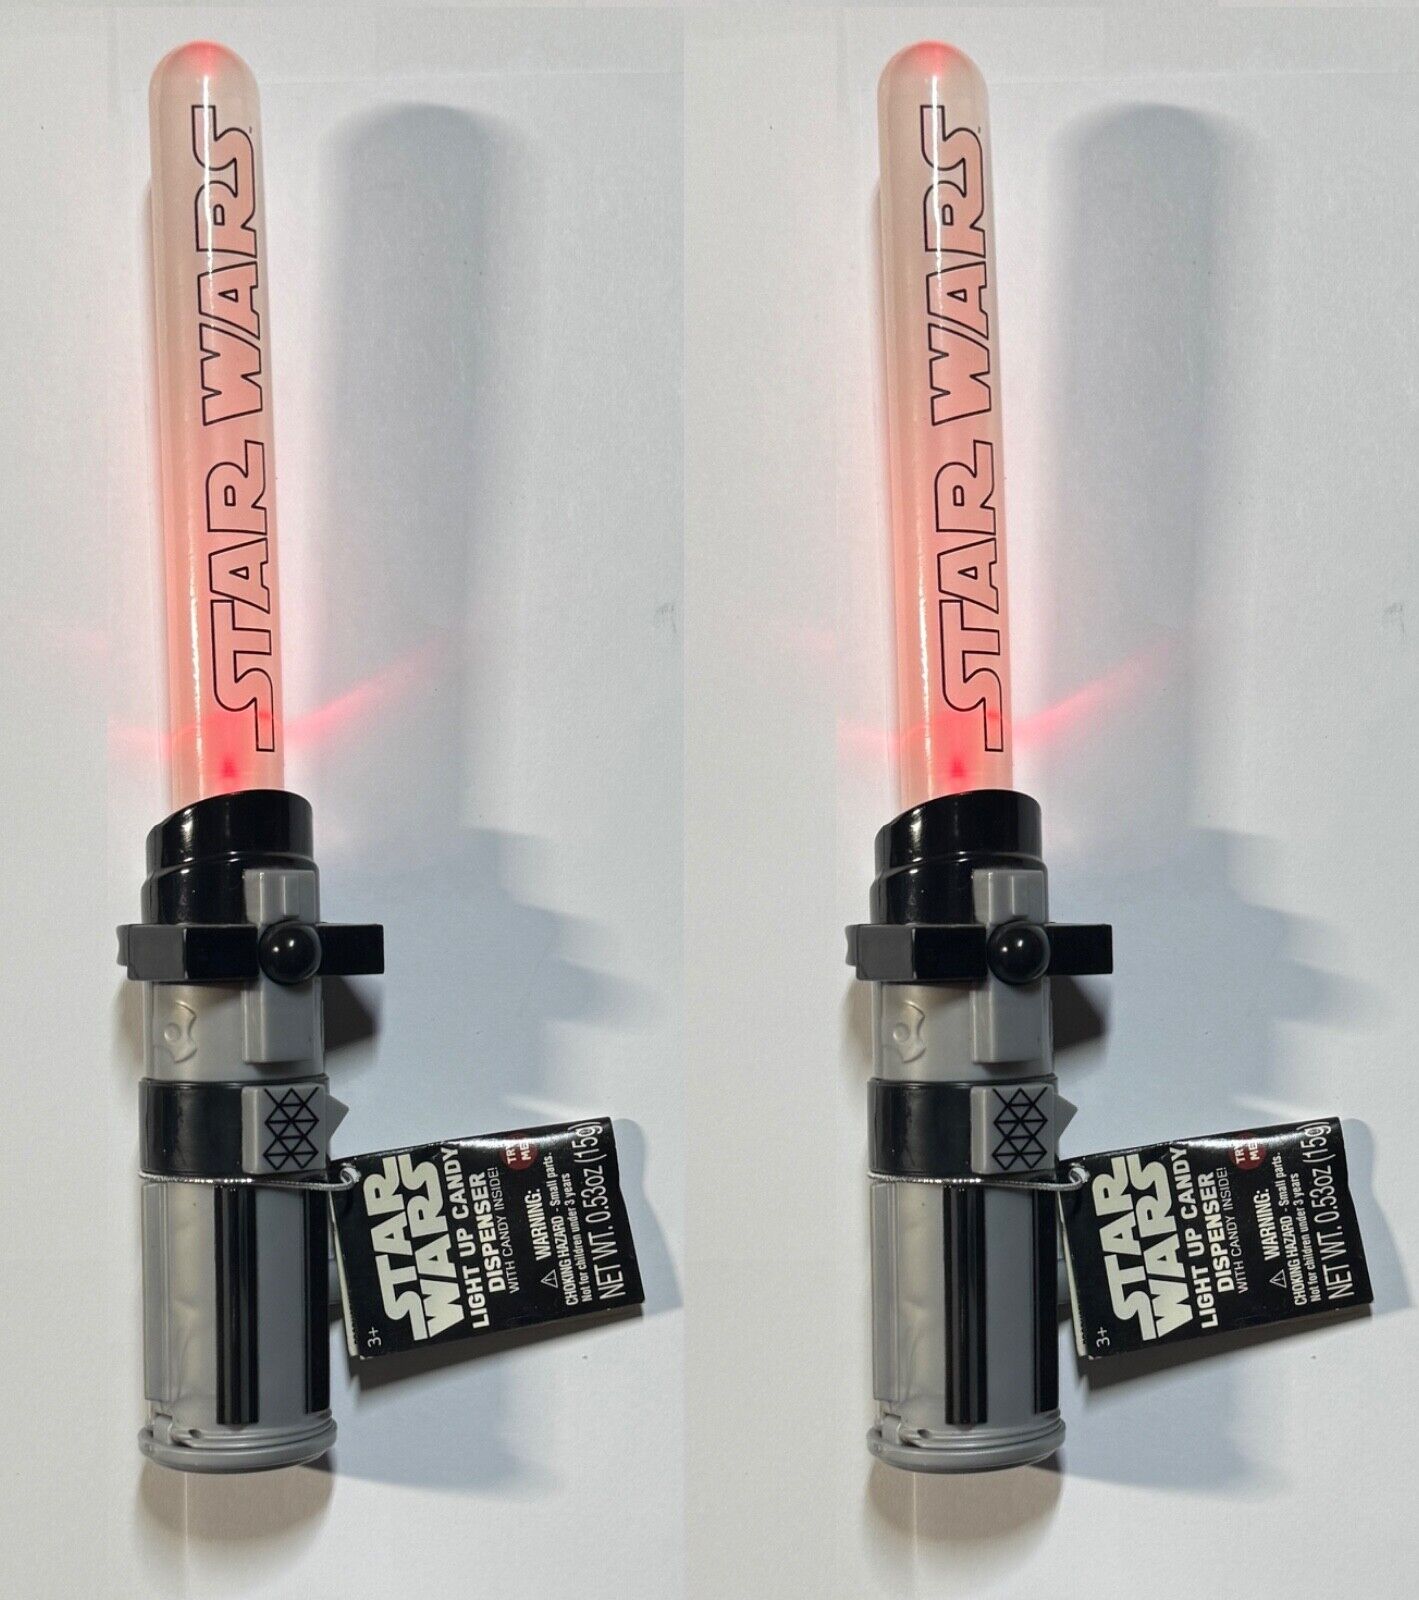 2x Star Wars Light Up Candy Dispensers